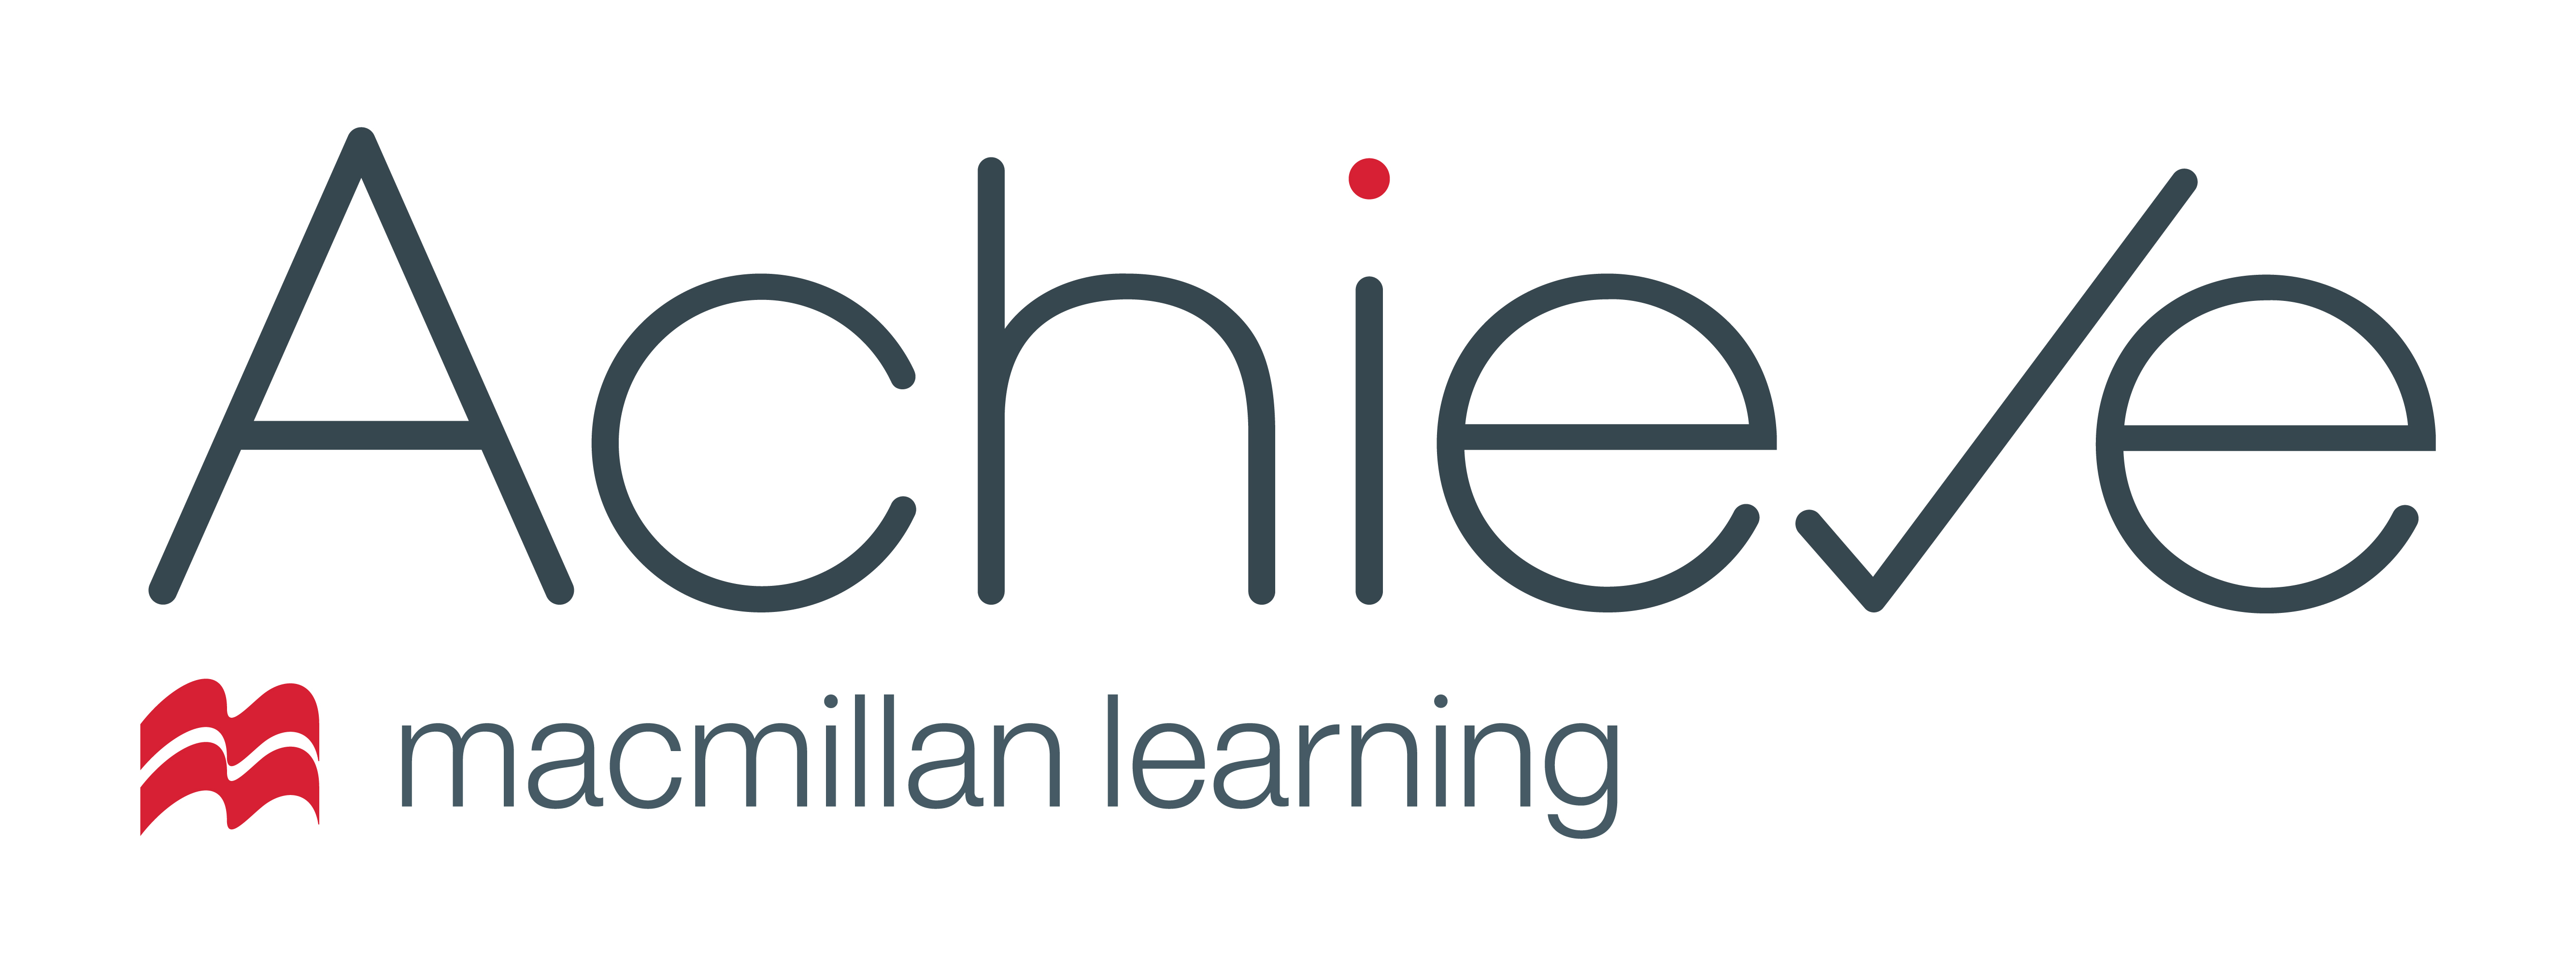 Achieve Helps Close Skills Gaps Among Less Academi Macmillan Teaching Community 